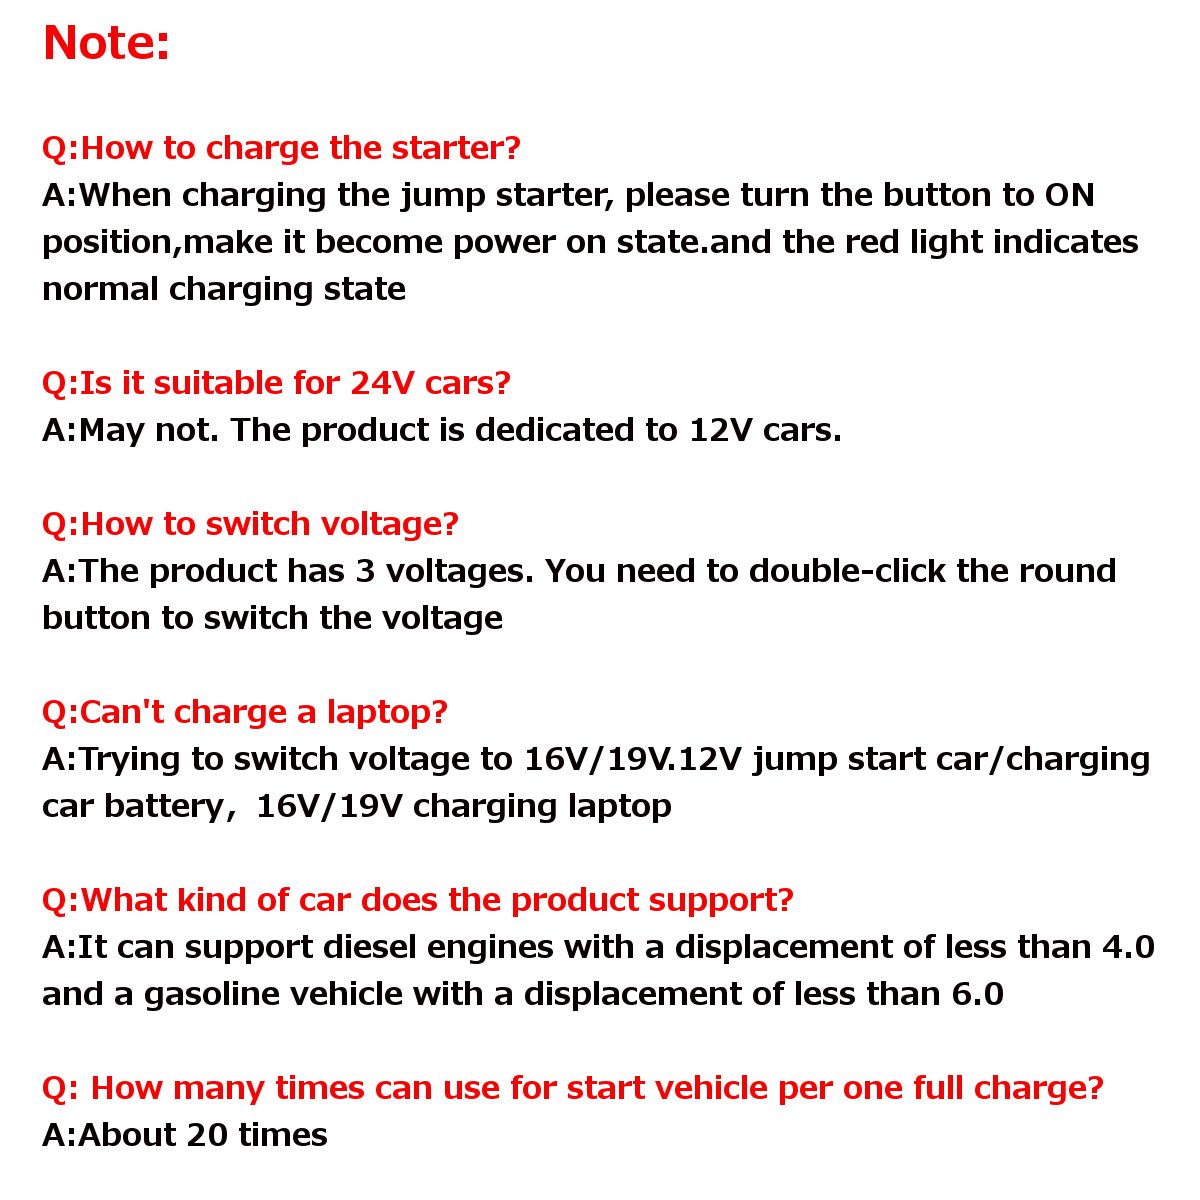 JX29-Portable-Car-Jump-Starter-89800mAh-600A-Peak-12V-Emergency-Battery-Booster-with-LED-Flashlight--1379321